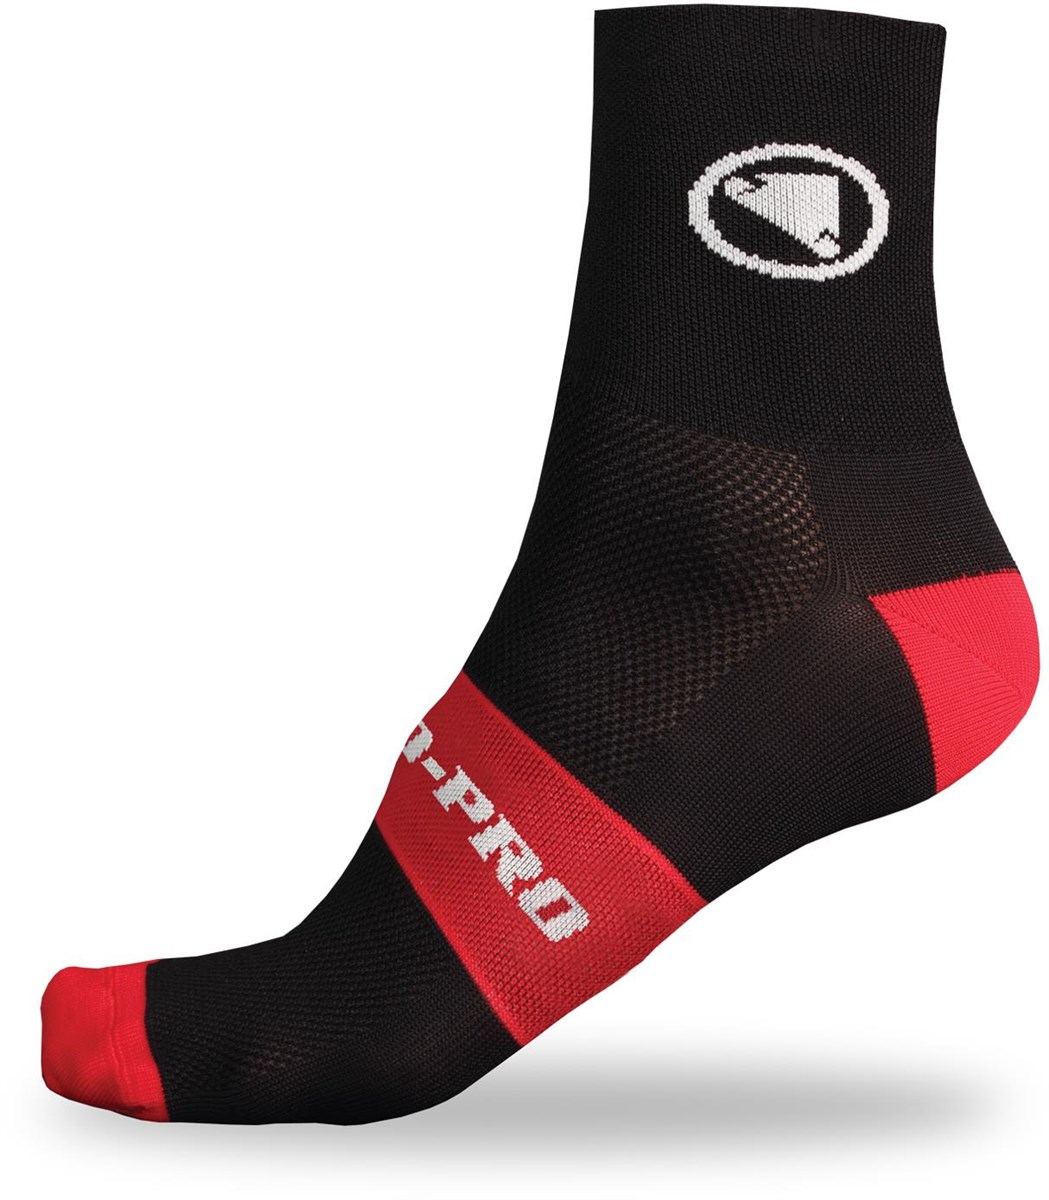 Endura FS260 Pro Cycling Socks AW17
